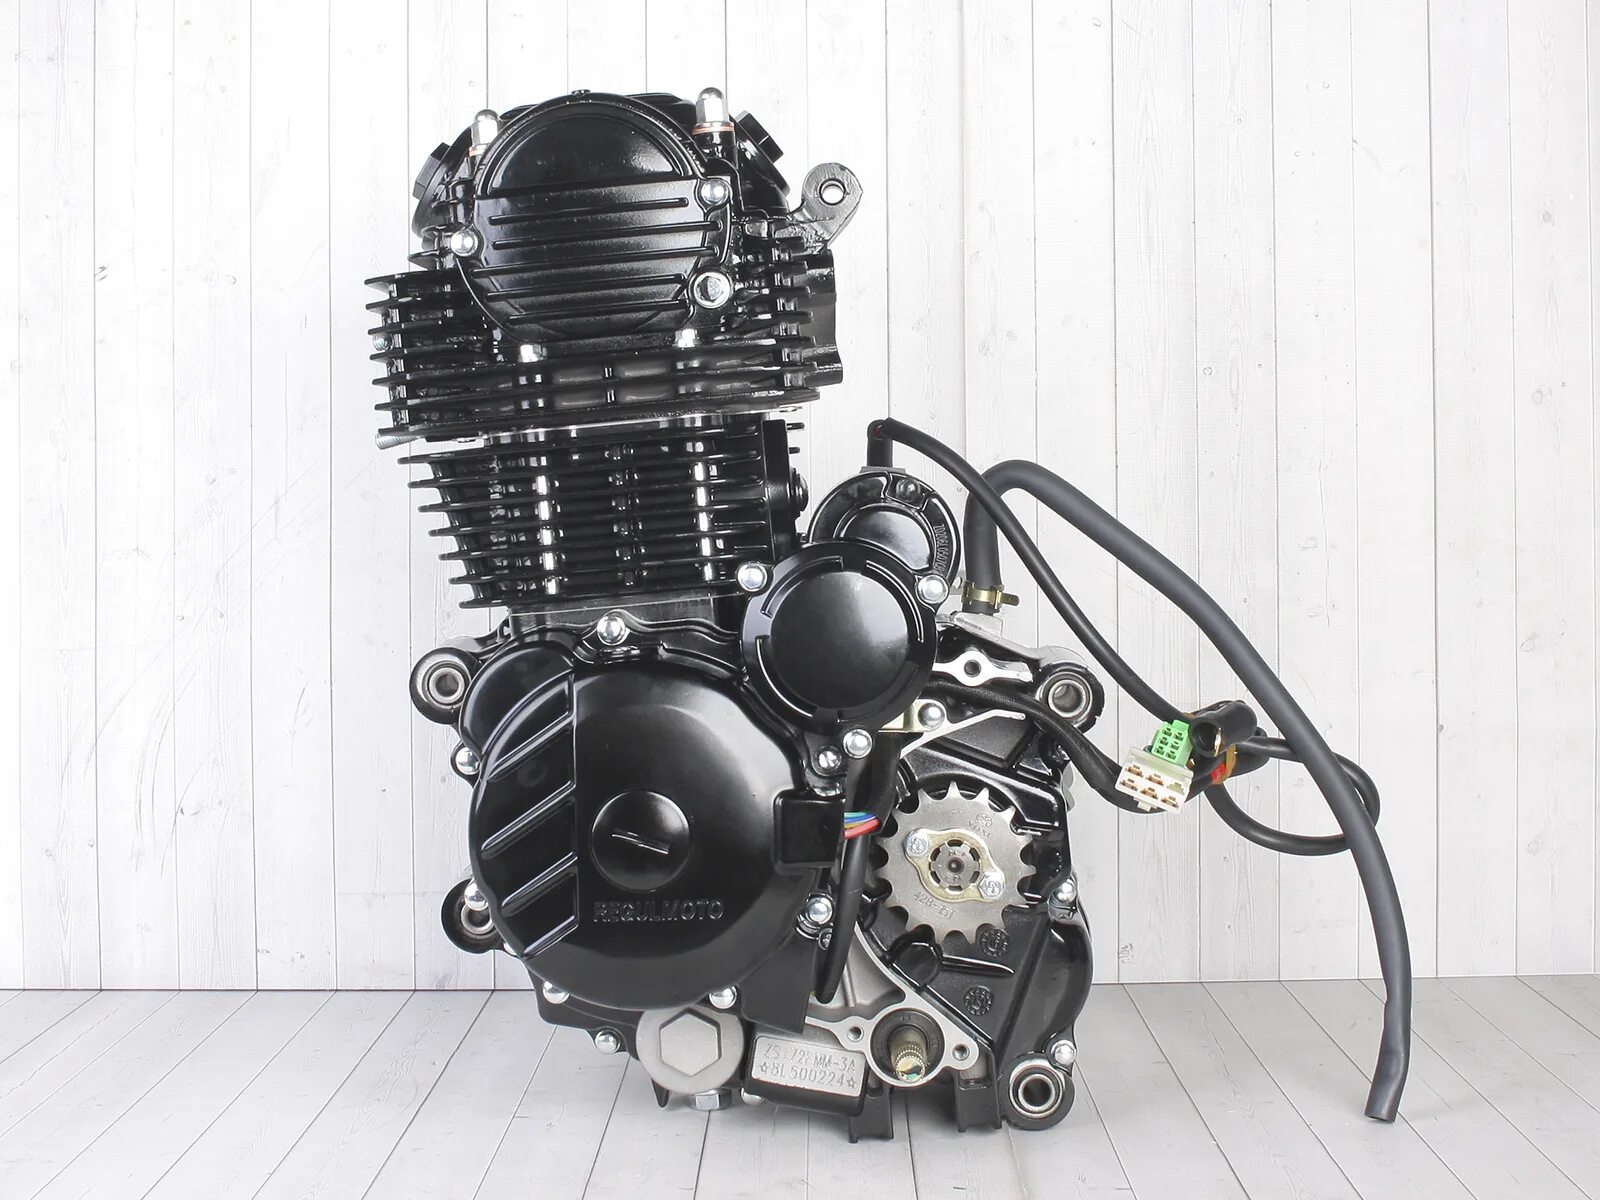 172 мотор масло. Zs172fmm-3a. 172fmm-3a. Мотор 172 FMM. Двигатель в сборе ZS 172fmm (cb250-f) 249см3.